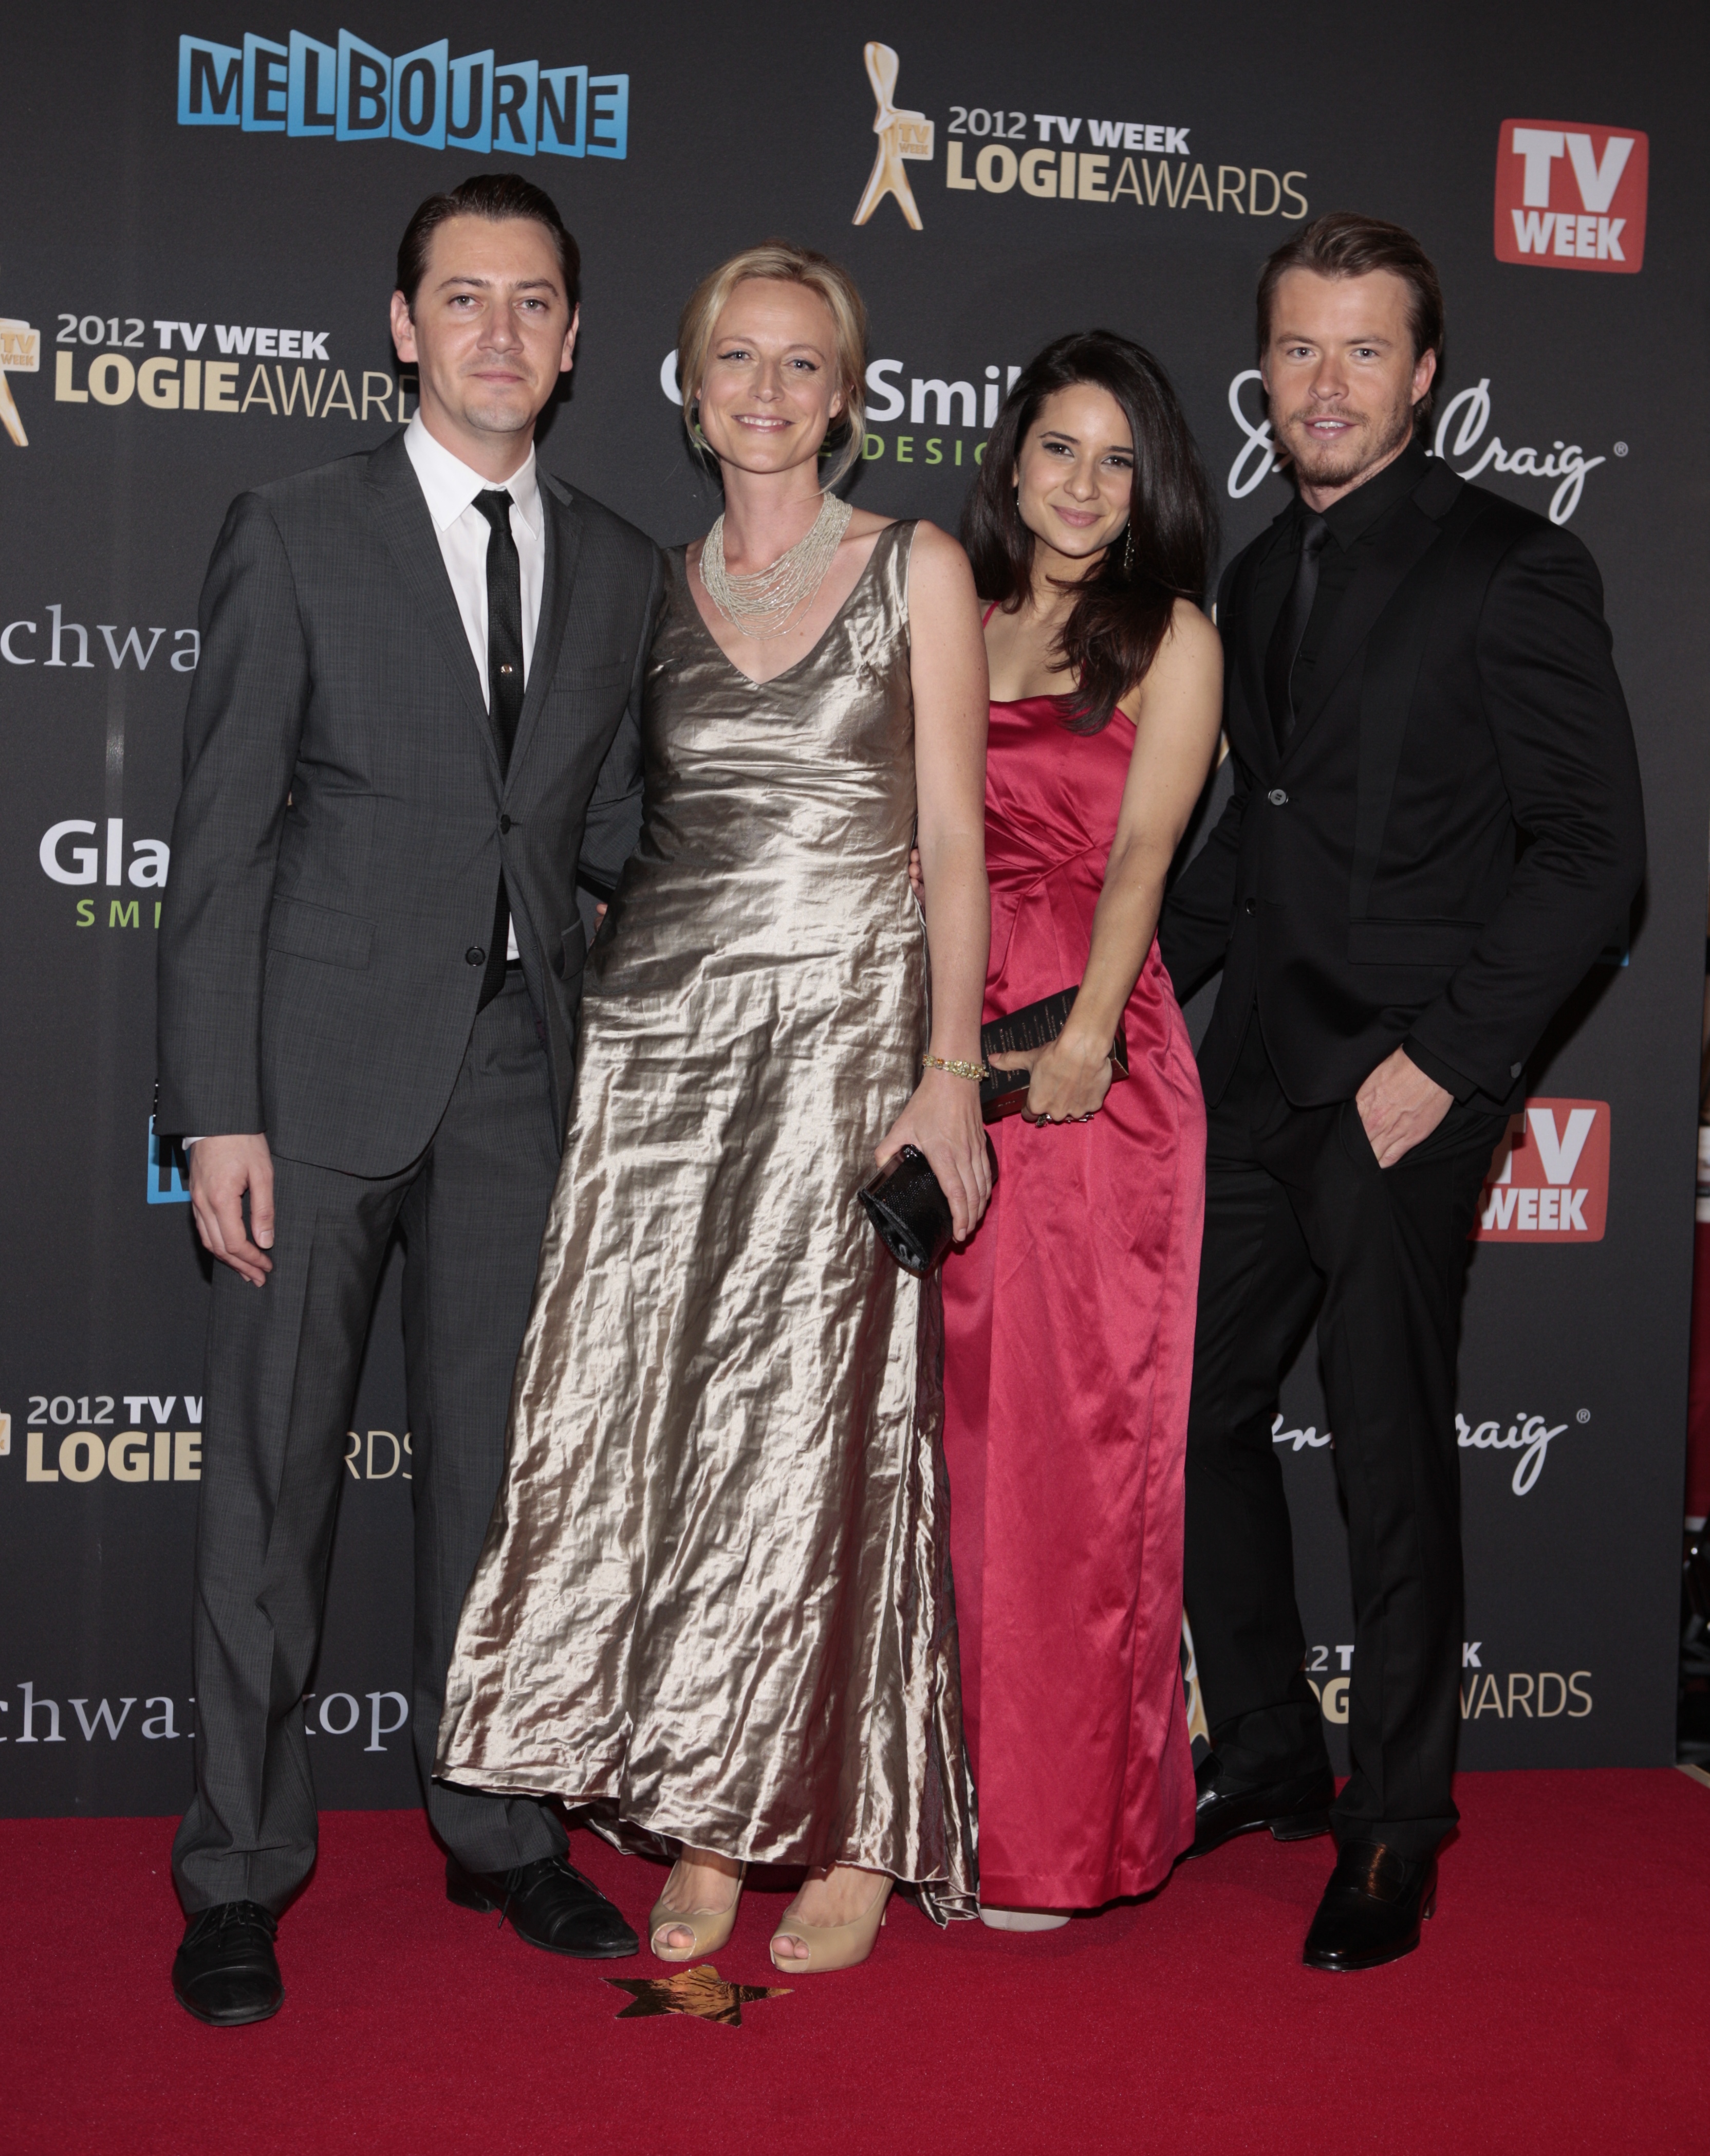 Crownies cast members Hamish Michael, Marta Dusseldorp, Todd Lasance and Andrea Demetriades at the 2012 TV Week Logie Awards.